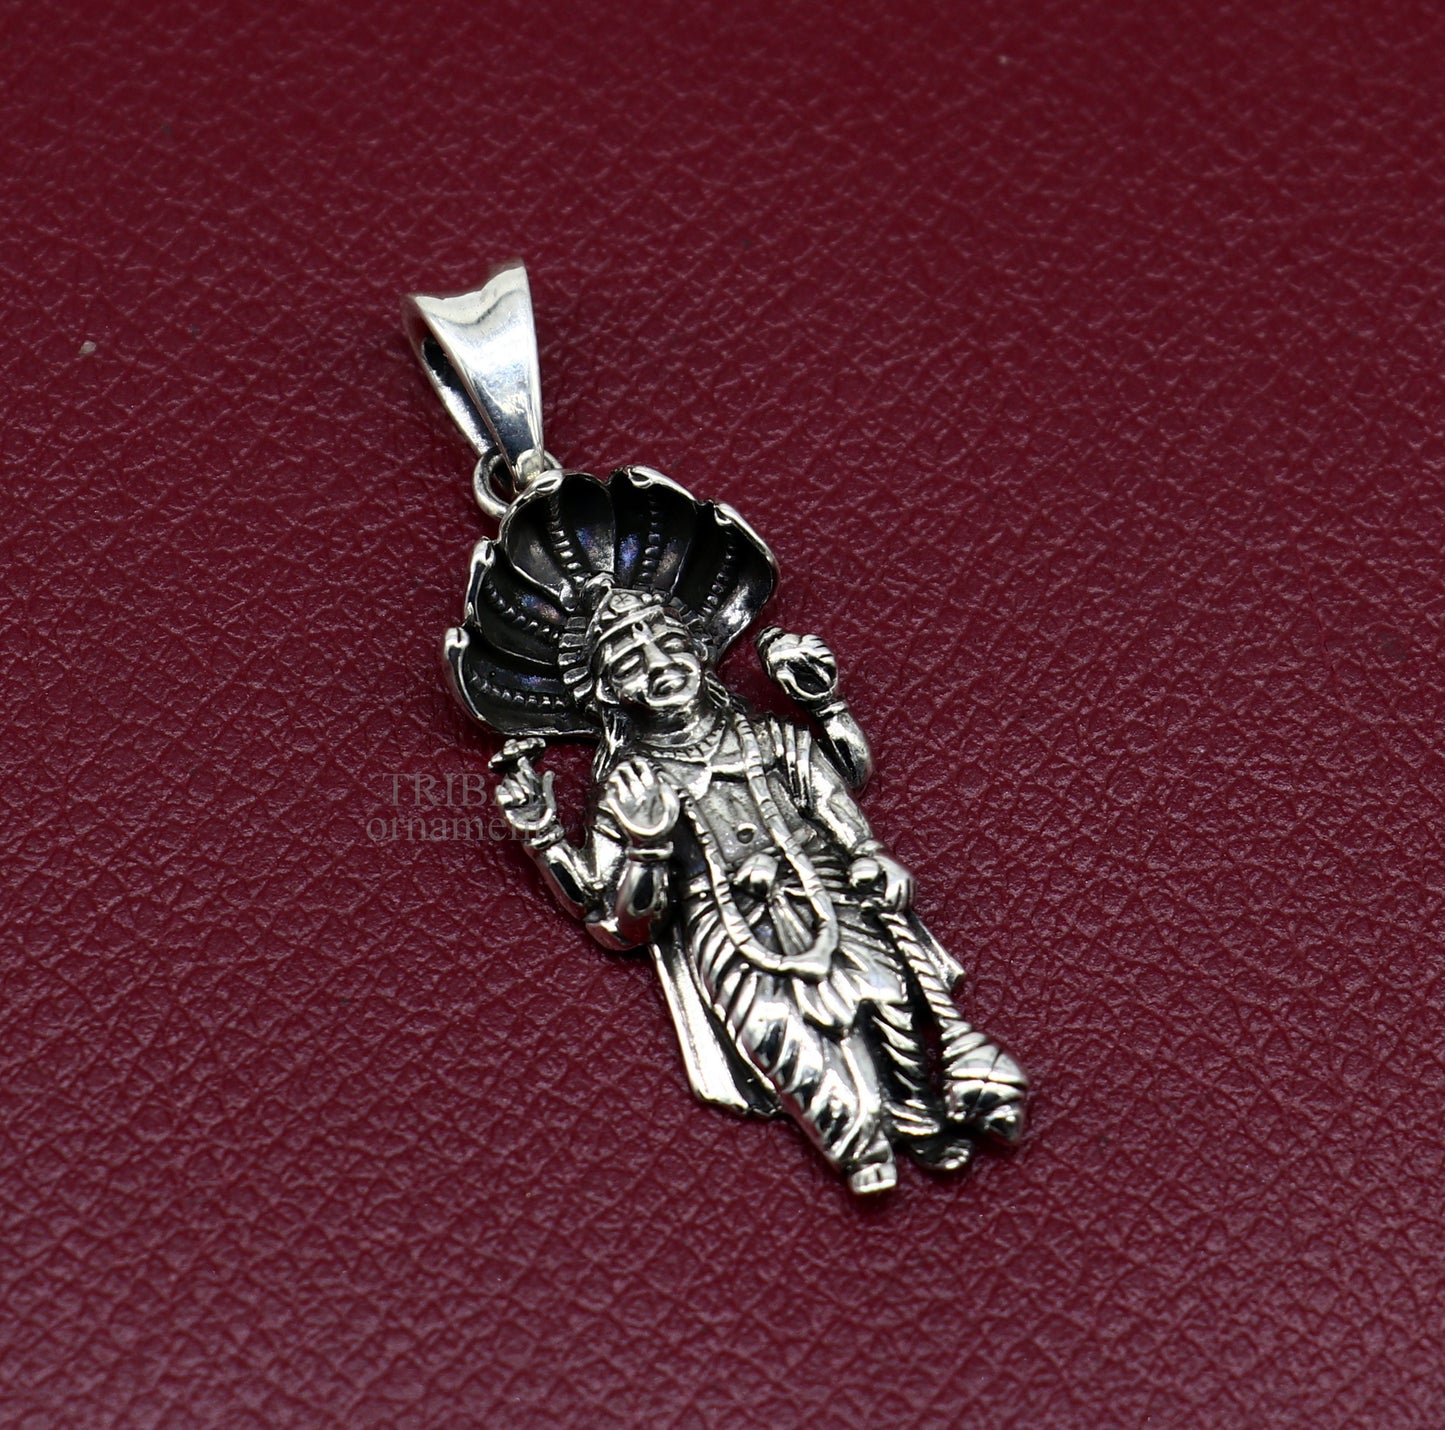 925 sterling silver handmade Hindu idol God Vishnu pendant, amazing divine lord Narayanan pendant unisex gifting jewelry ssp1462 - TRIBAL ORNAMENTS